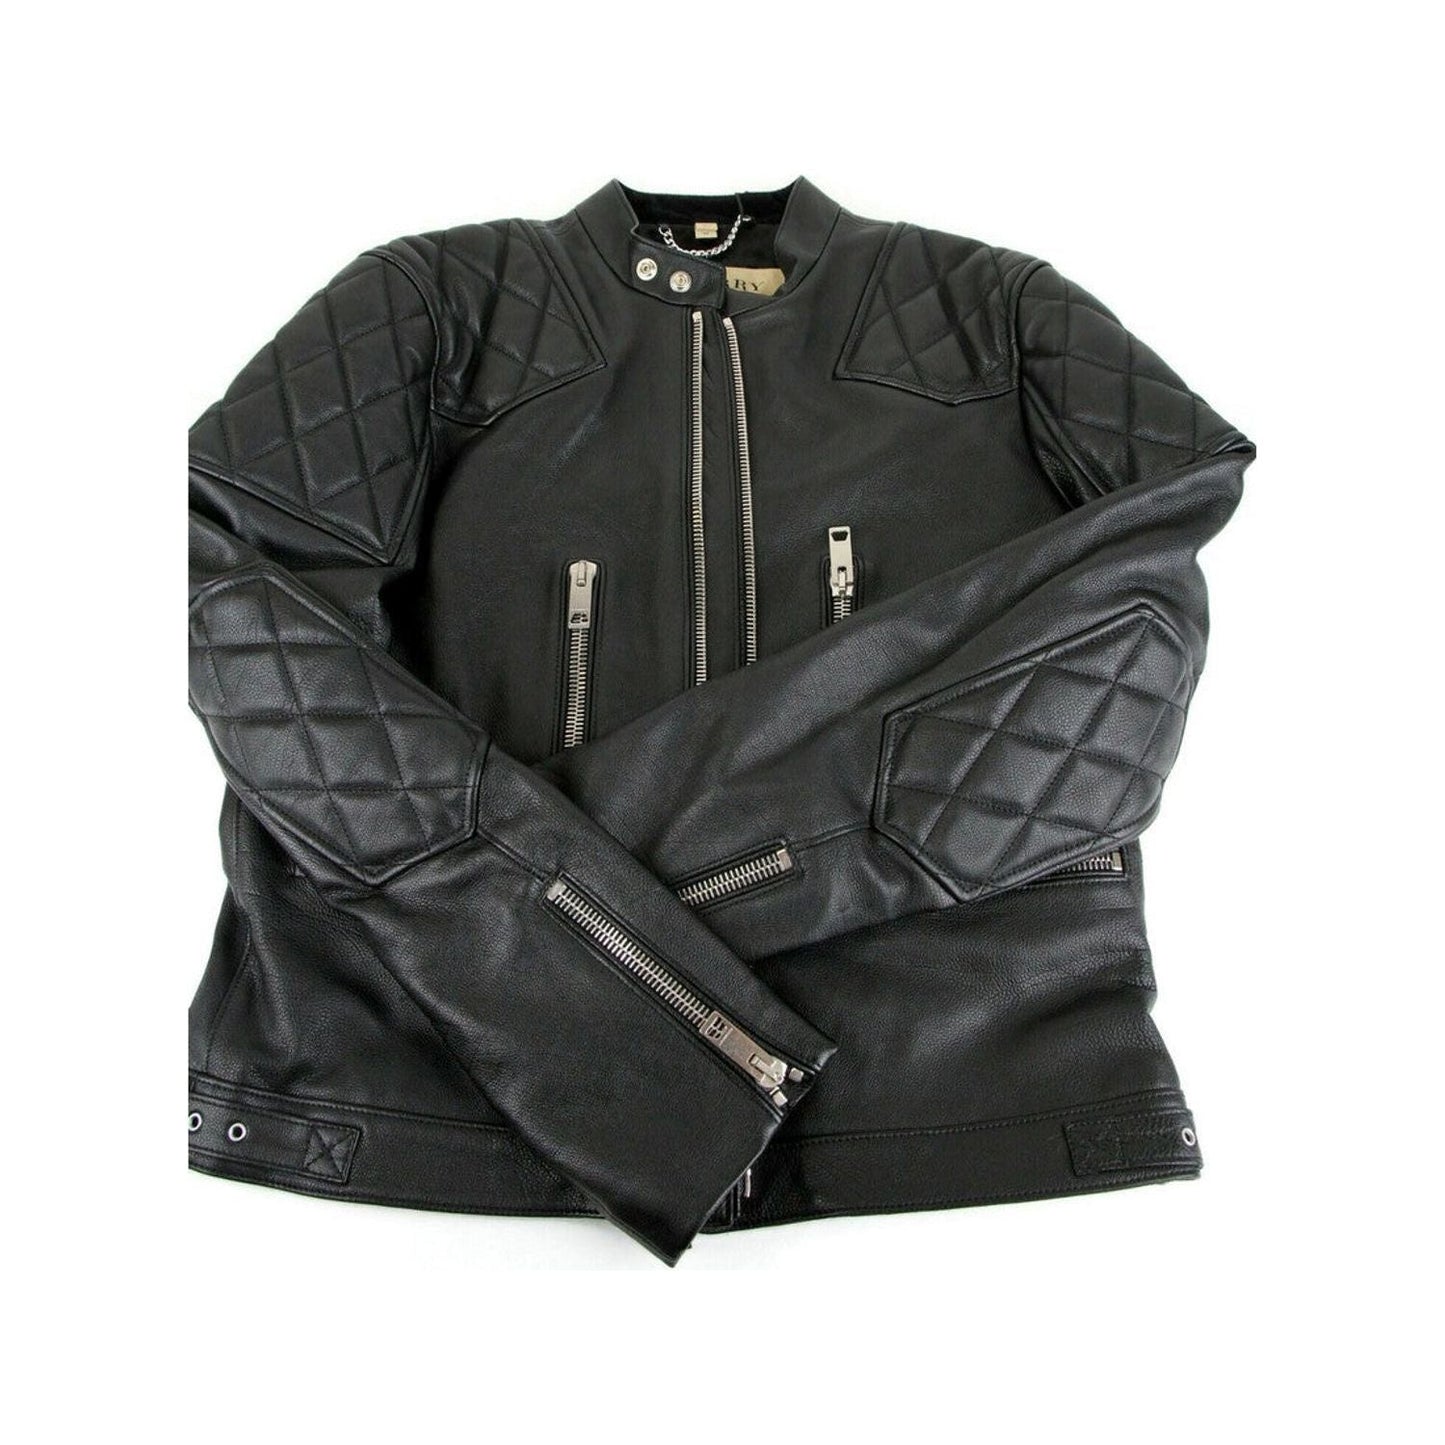 Burberry Burberry Men's Black Leather Diamond Quilted Biker Jacket burberry-mens-black-leather-diamond-quilted-biker-jacket